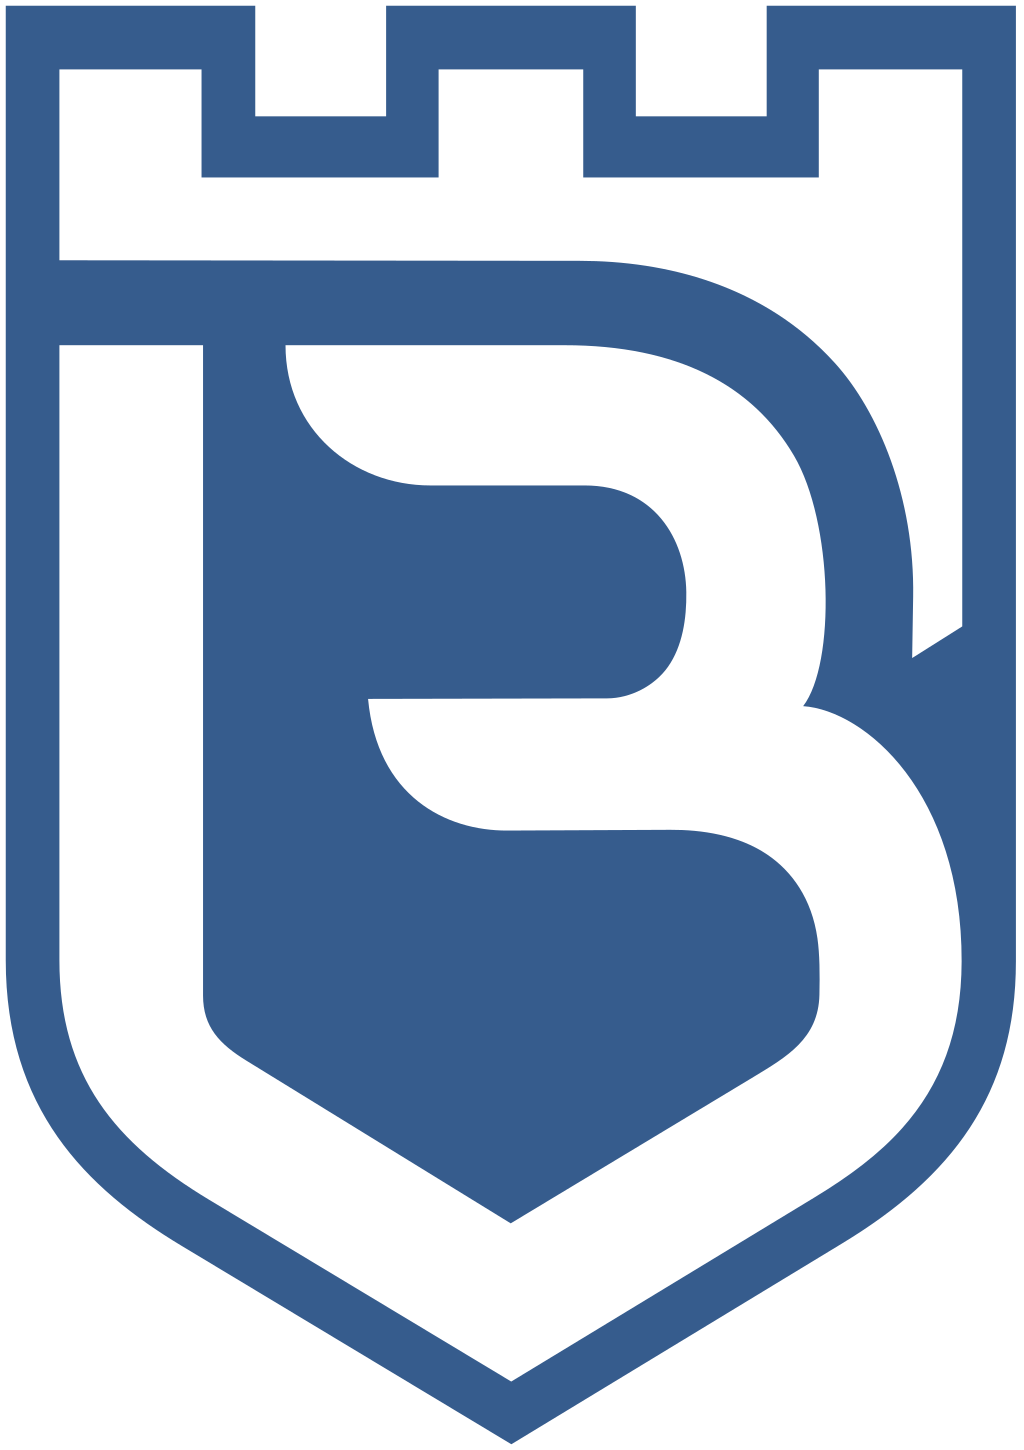 Logo Belenenses SAD